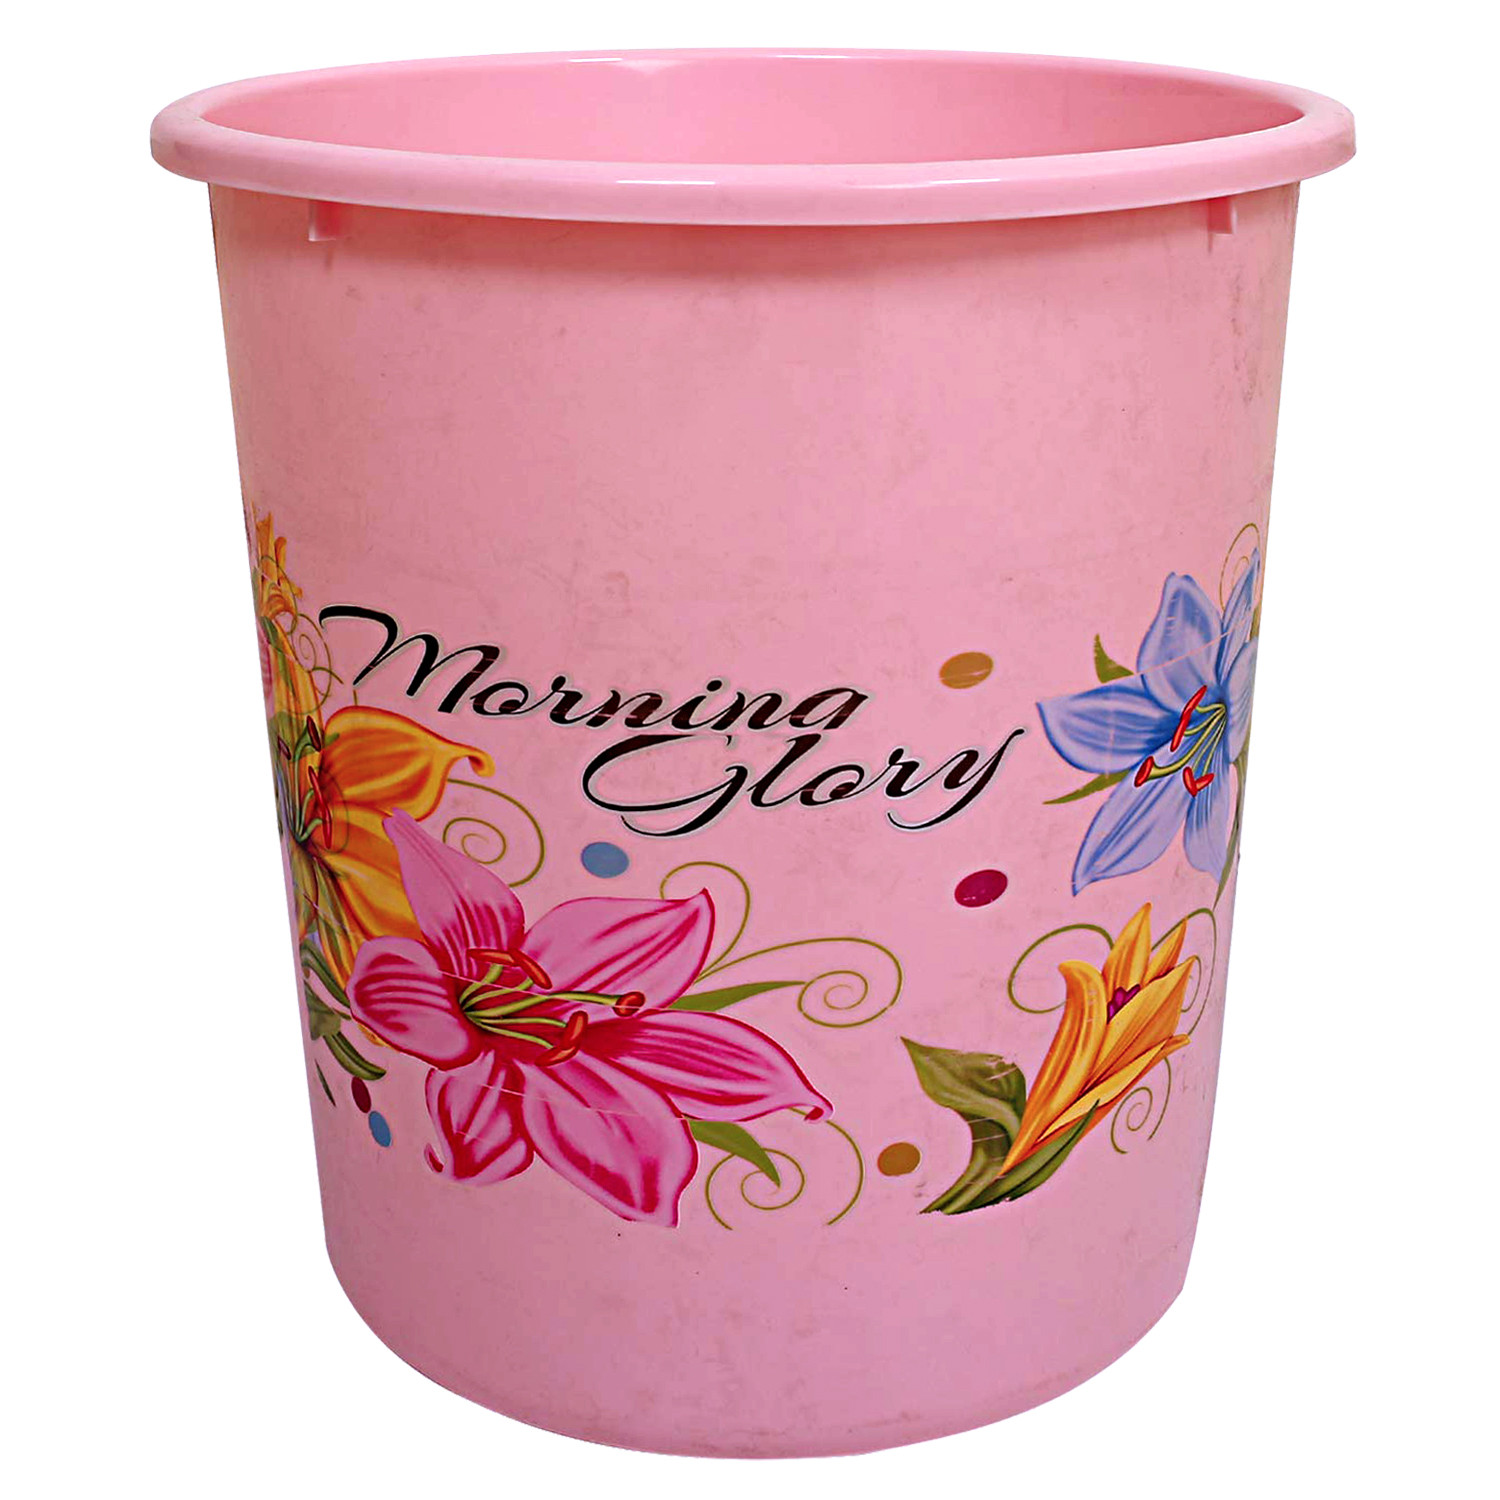 Kuber Industries Flower Print Plastic 2 Pieces Dustbin/ Garbage Bin/ Waste Bin, 13 Liters (Pink & Blue)